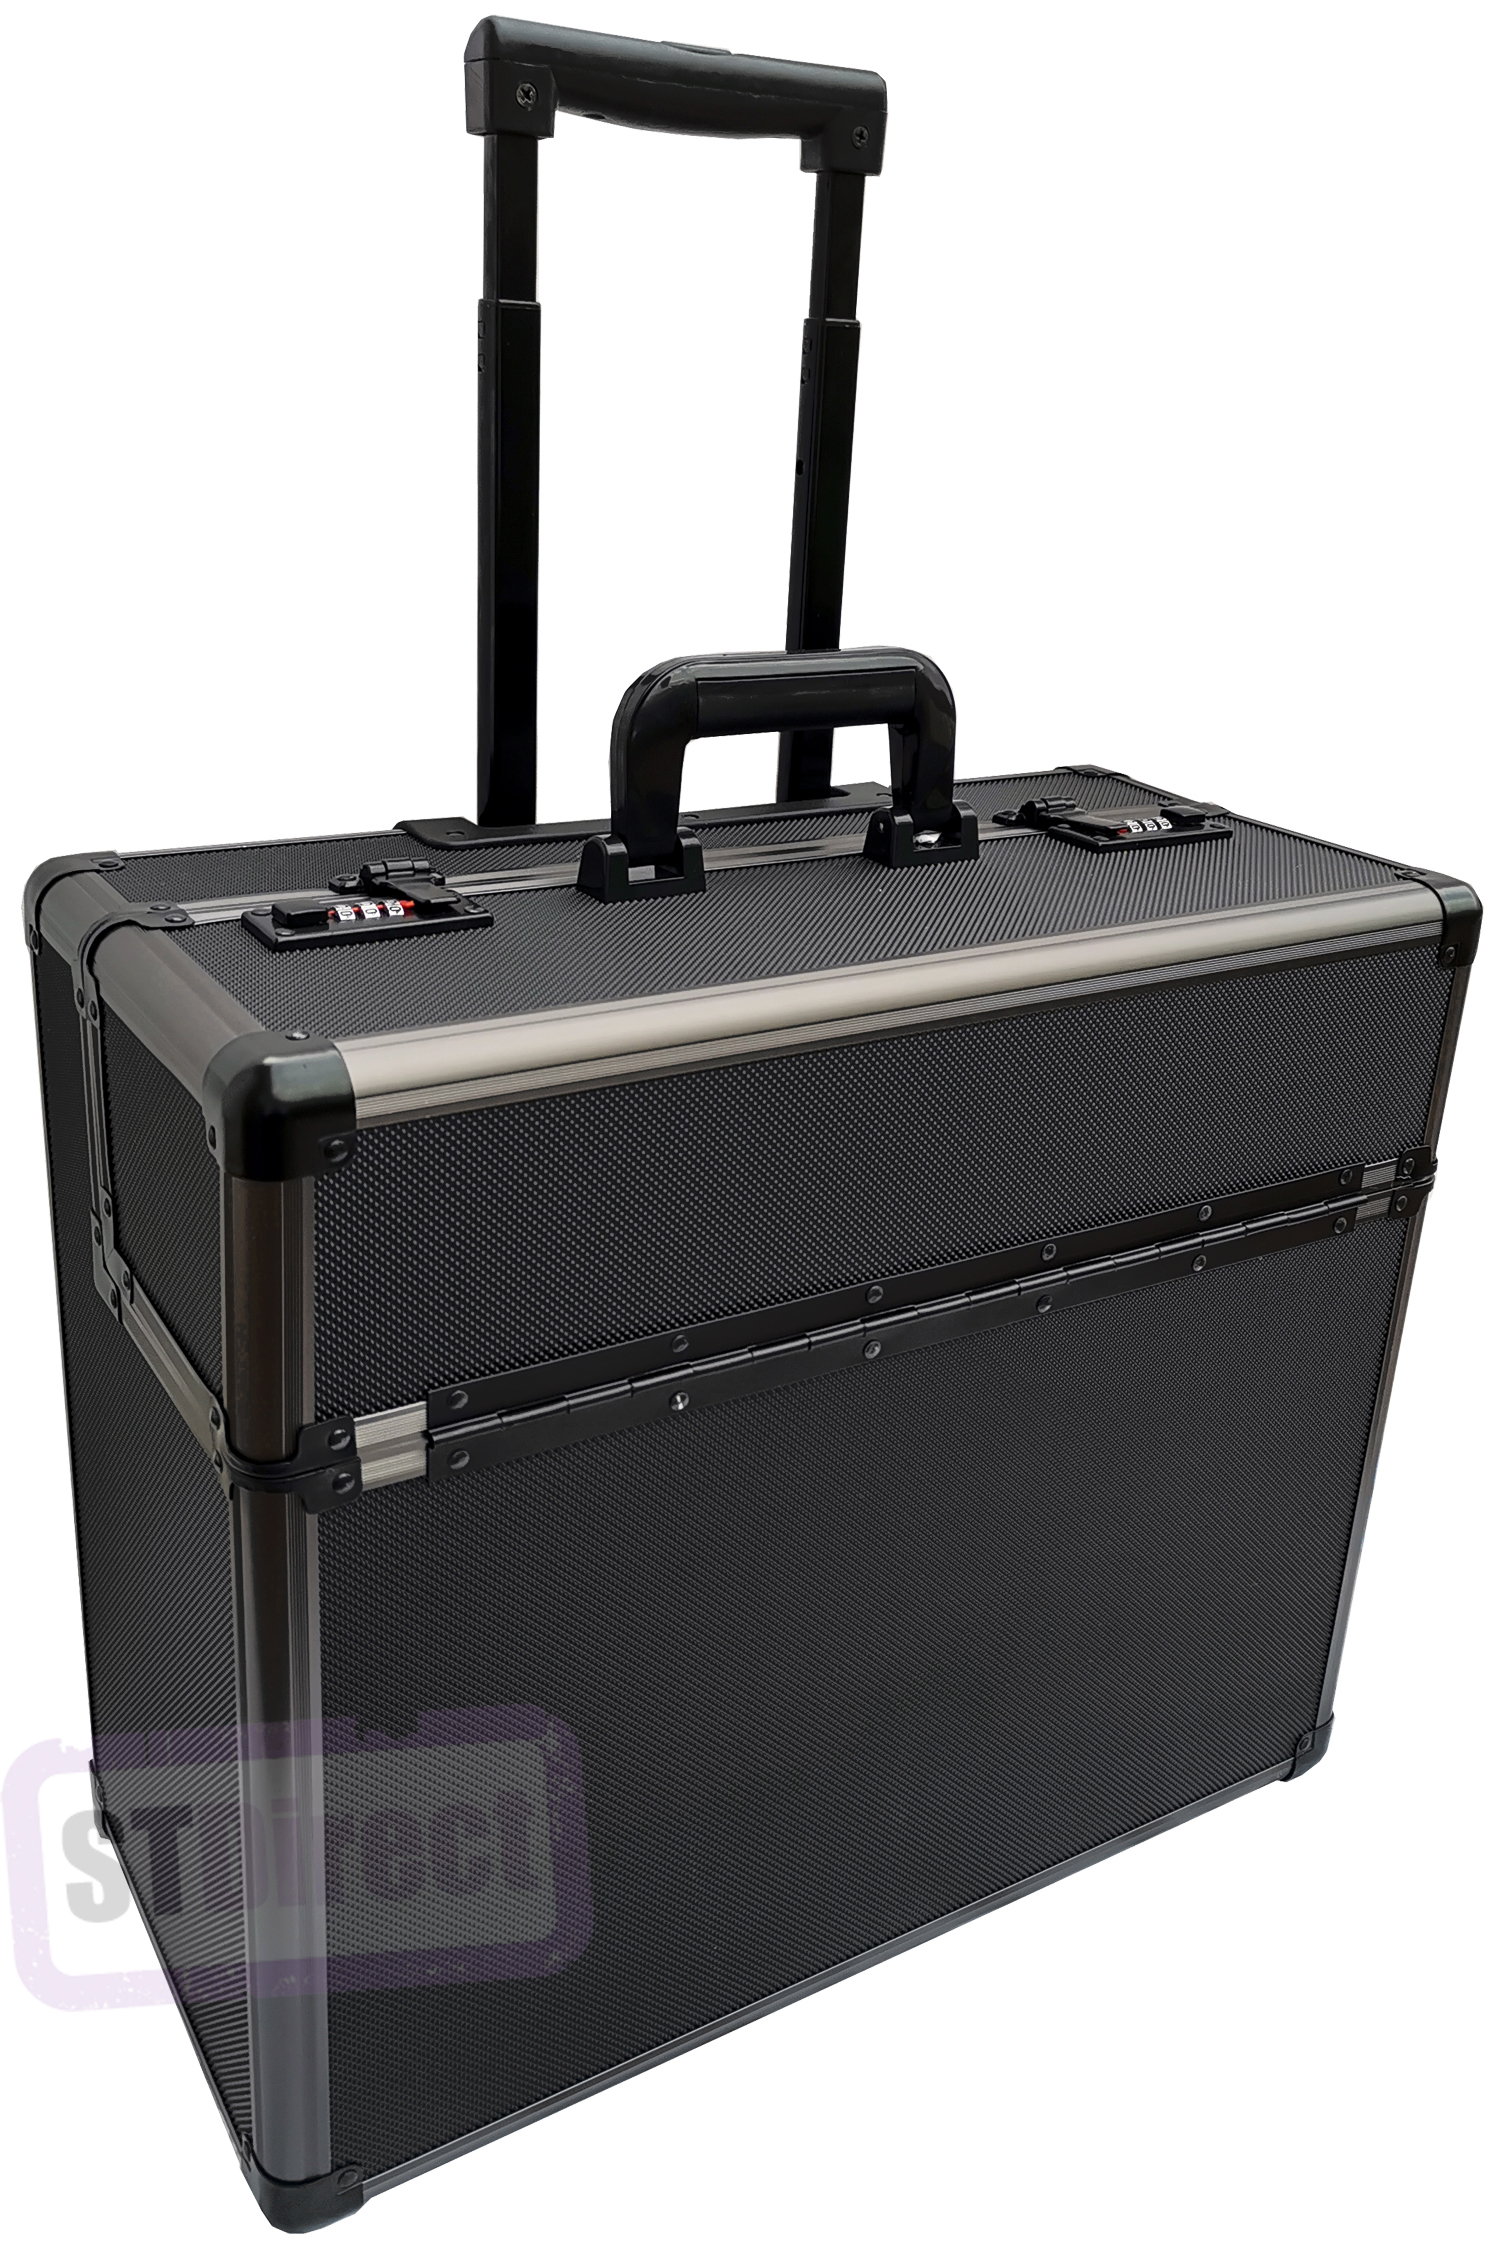 Laptop Suitcase Hot Sale - www.illva.com 1694853757